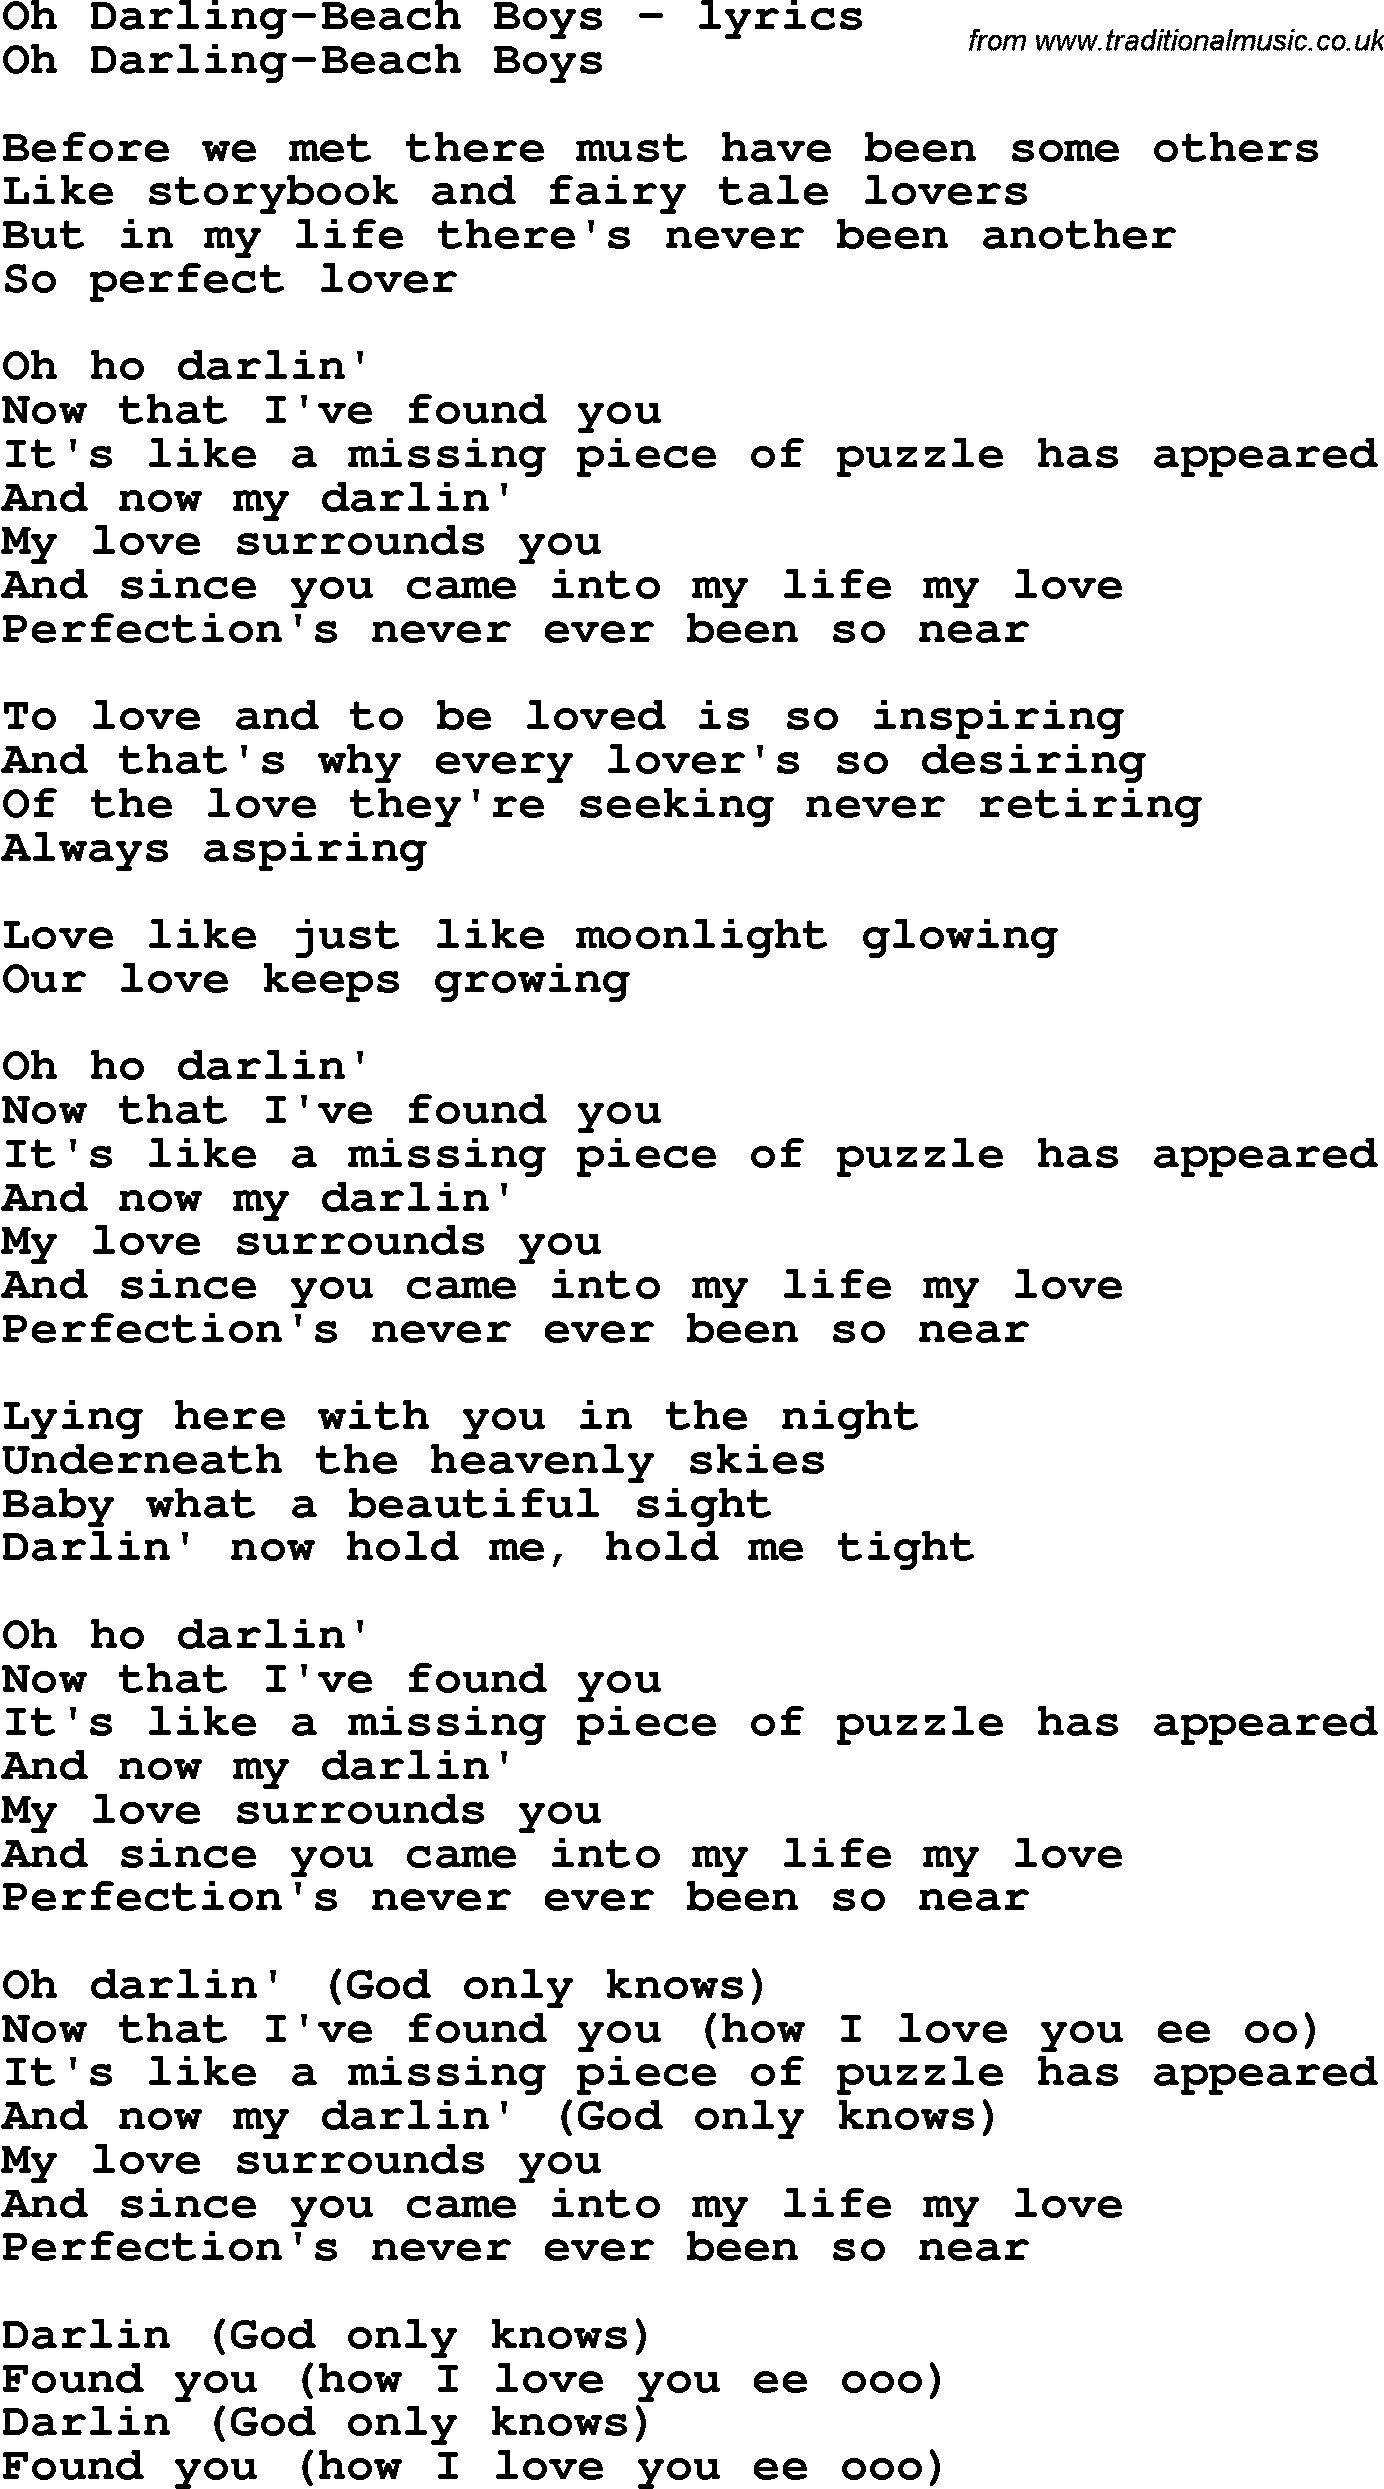 Love Song Lyrics for: Oh Darling-Beach Boys